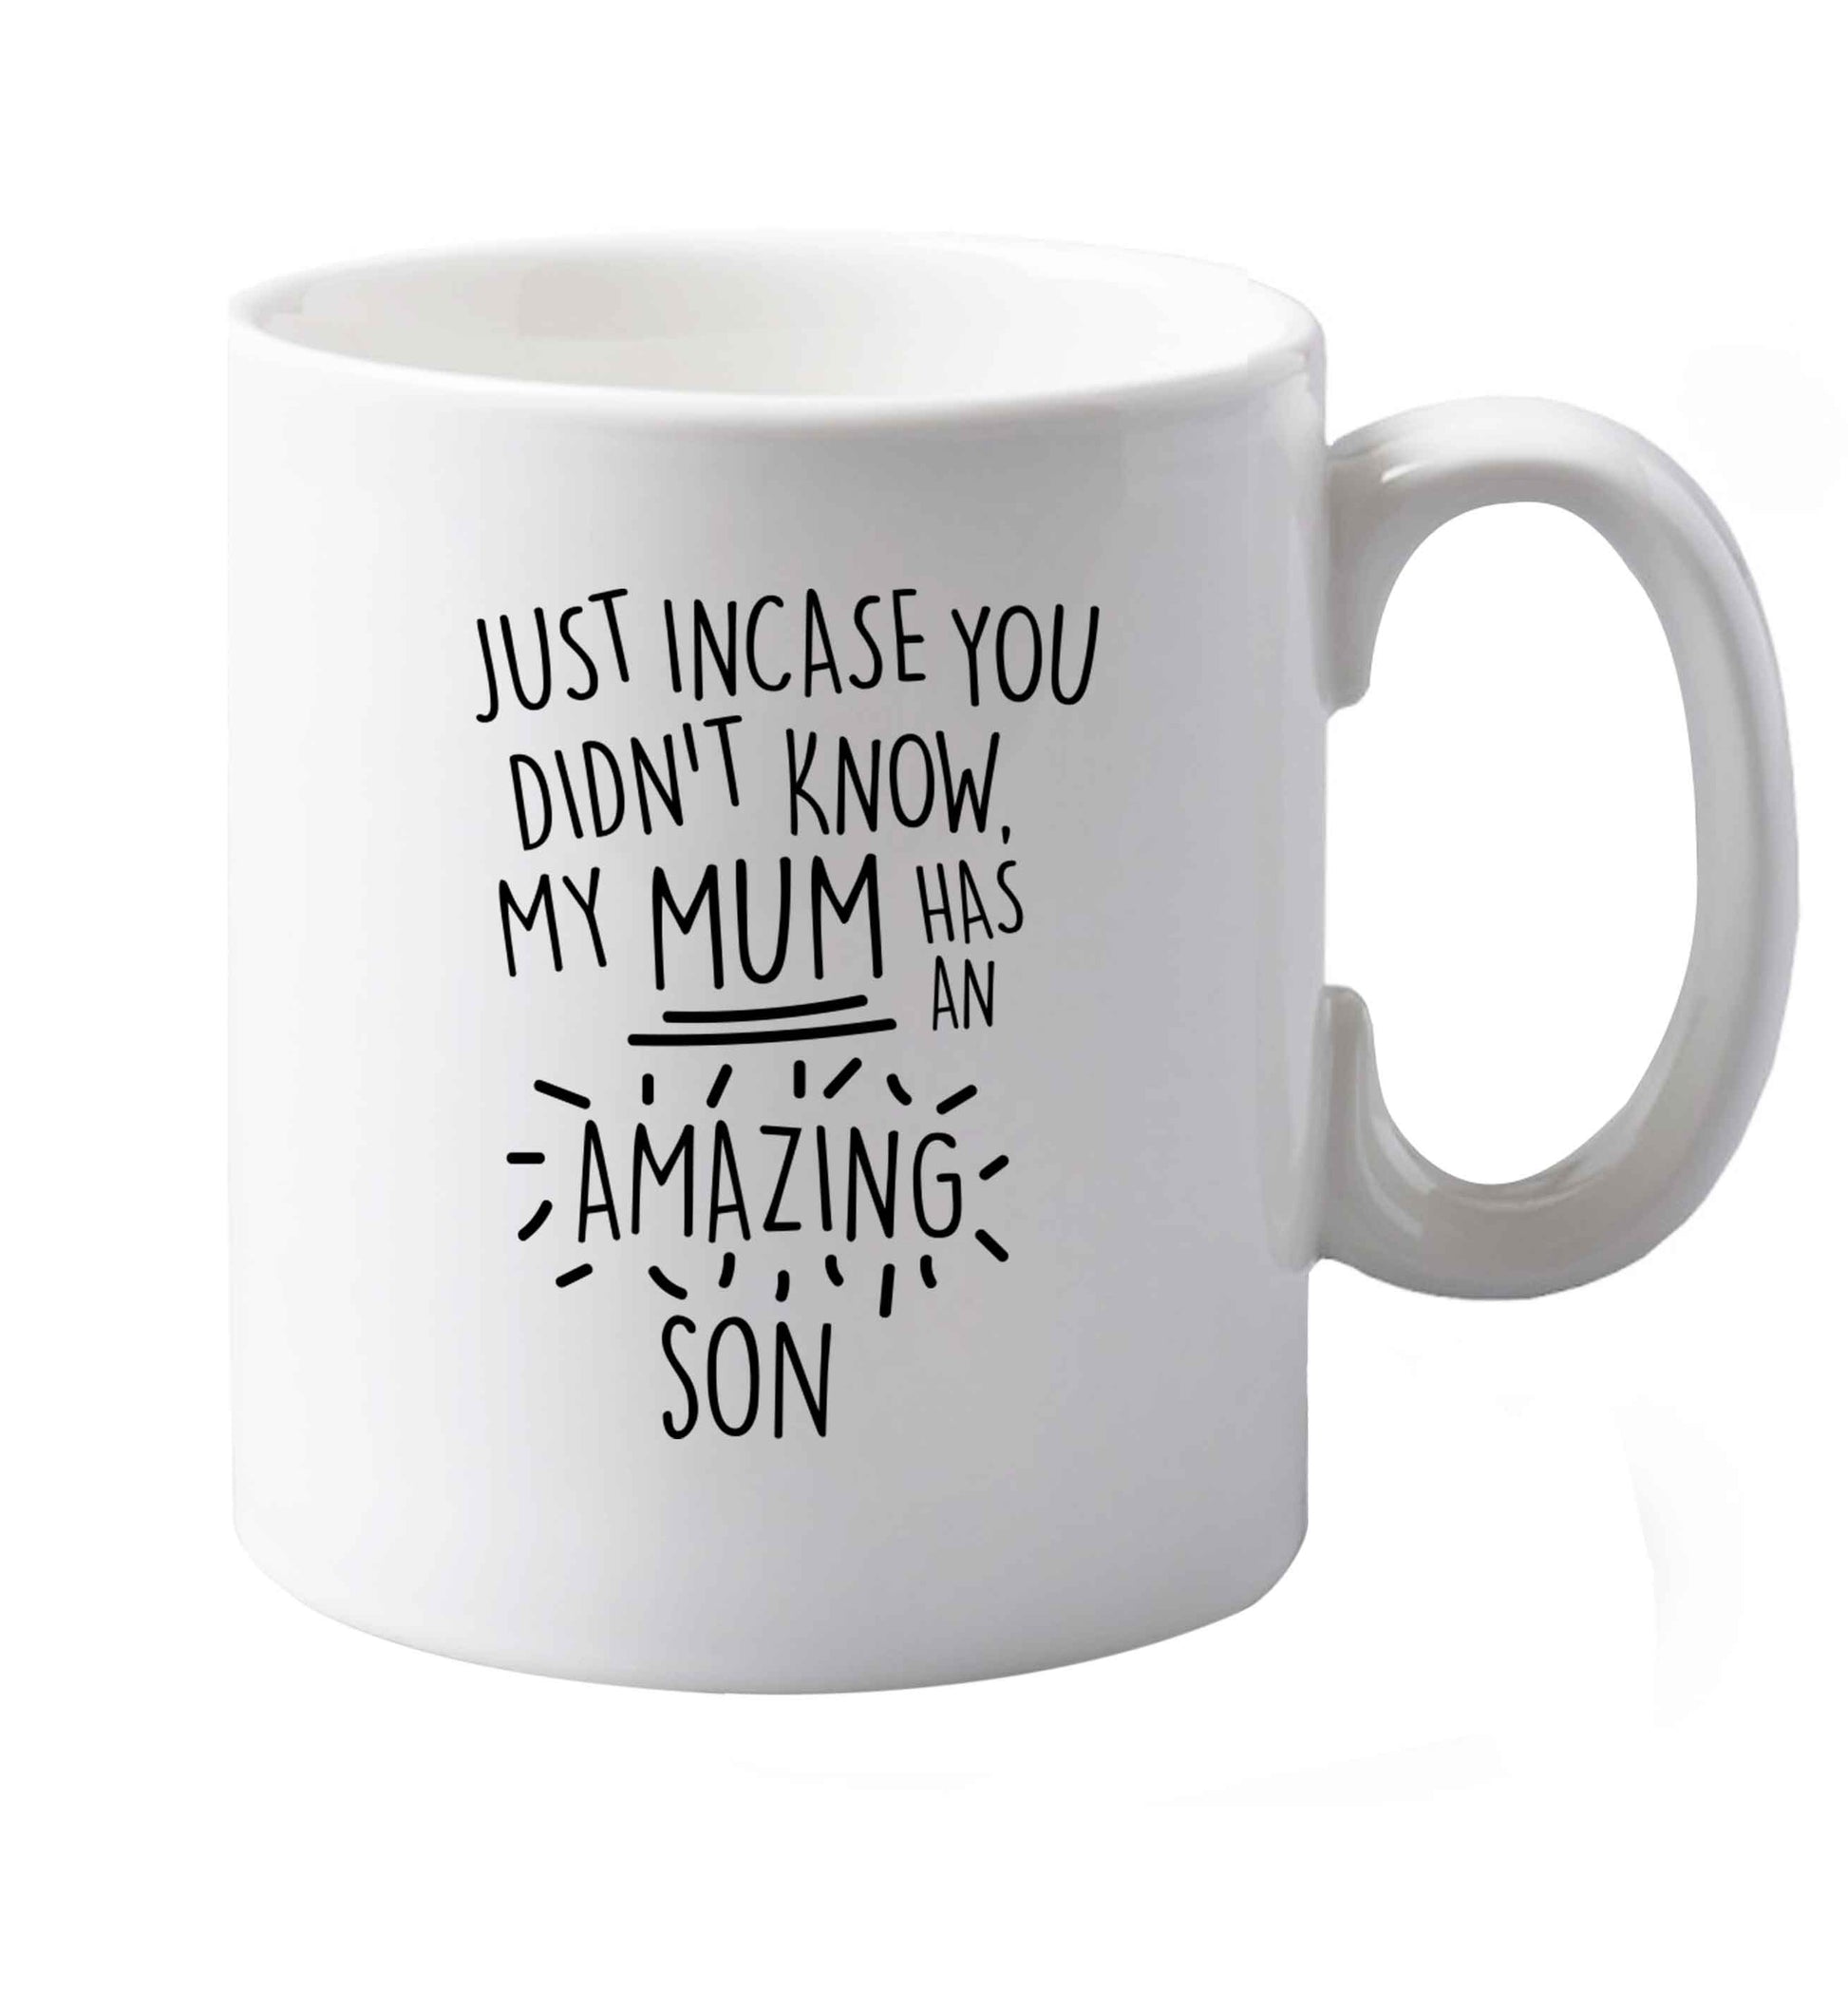 10 oz Just incase you didn't know my mum has an amazing son ceramic mug both sides